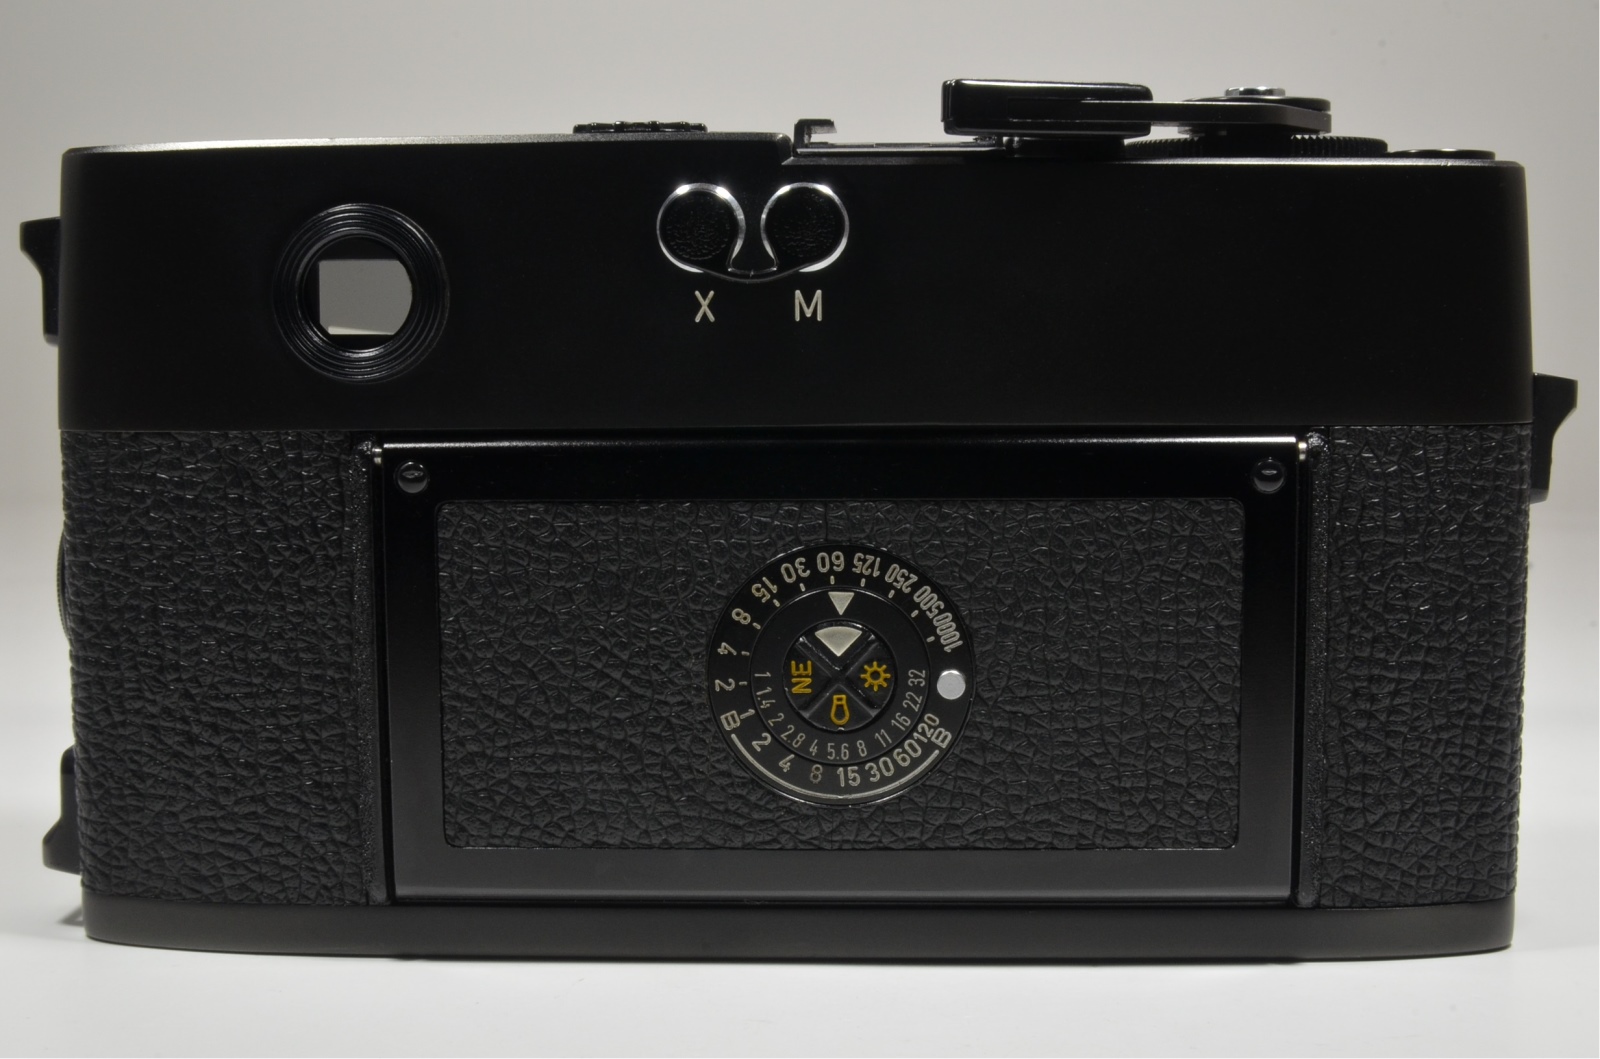 leica m5 black 3 lug year 1973 s/n 1377559 rangefinder camera